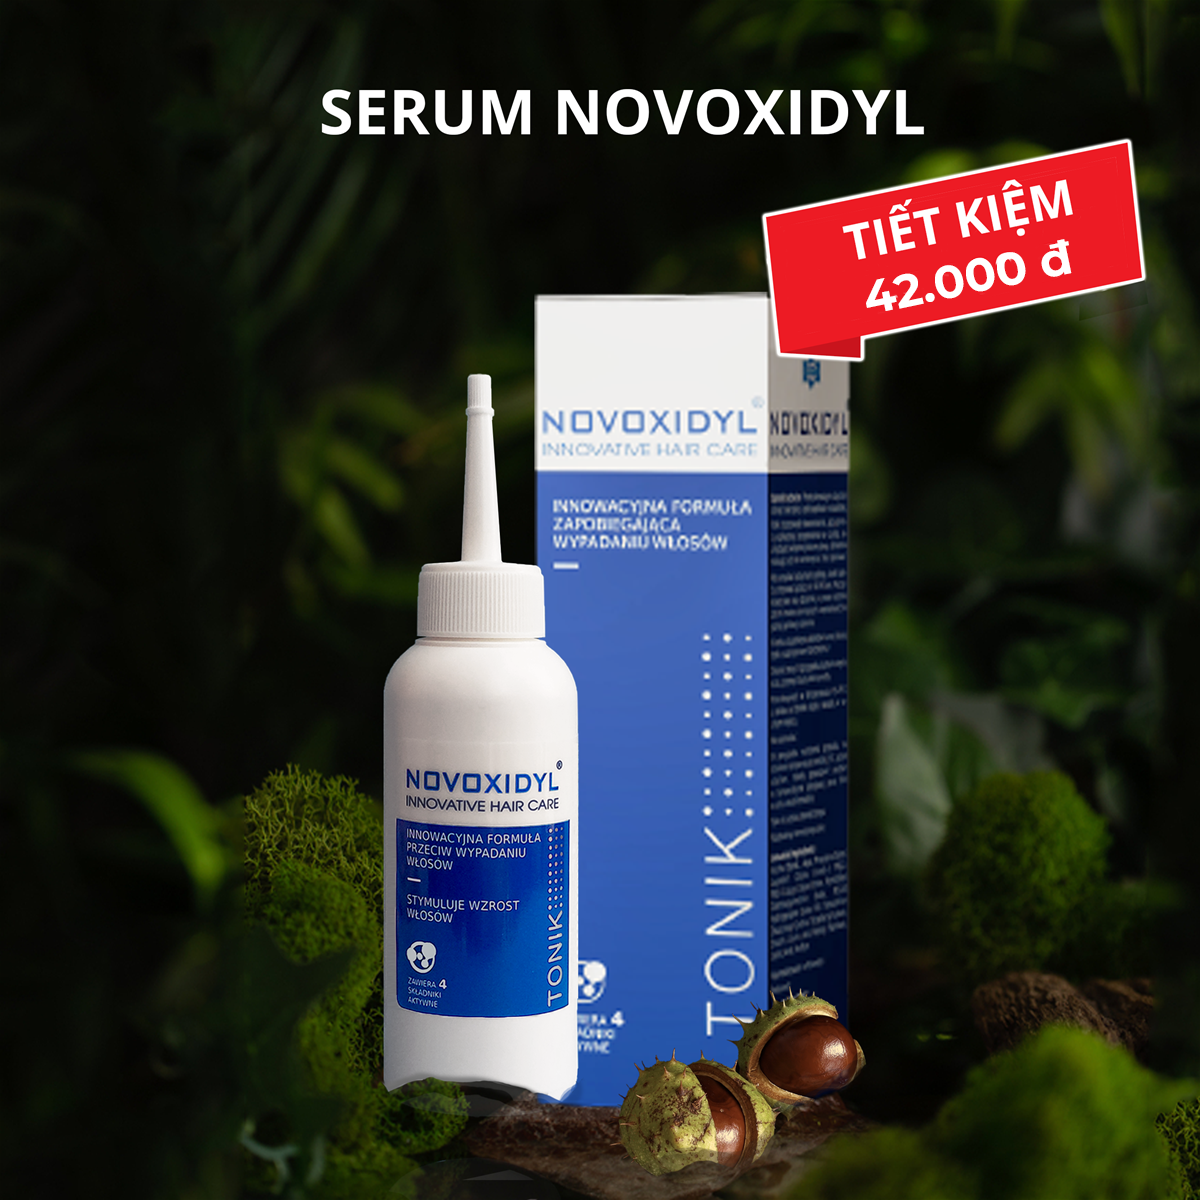 Serum y tế Novoxidyl hỗ trợ trị rụng tóc